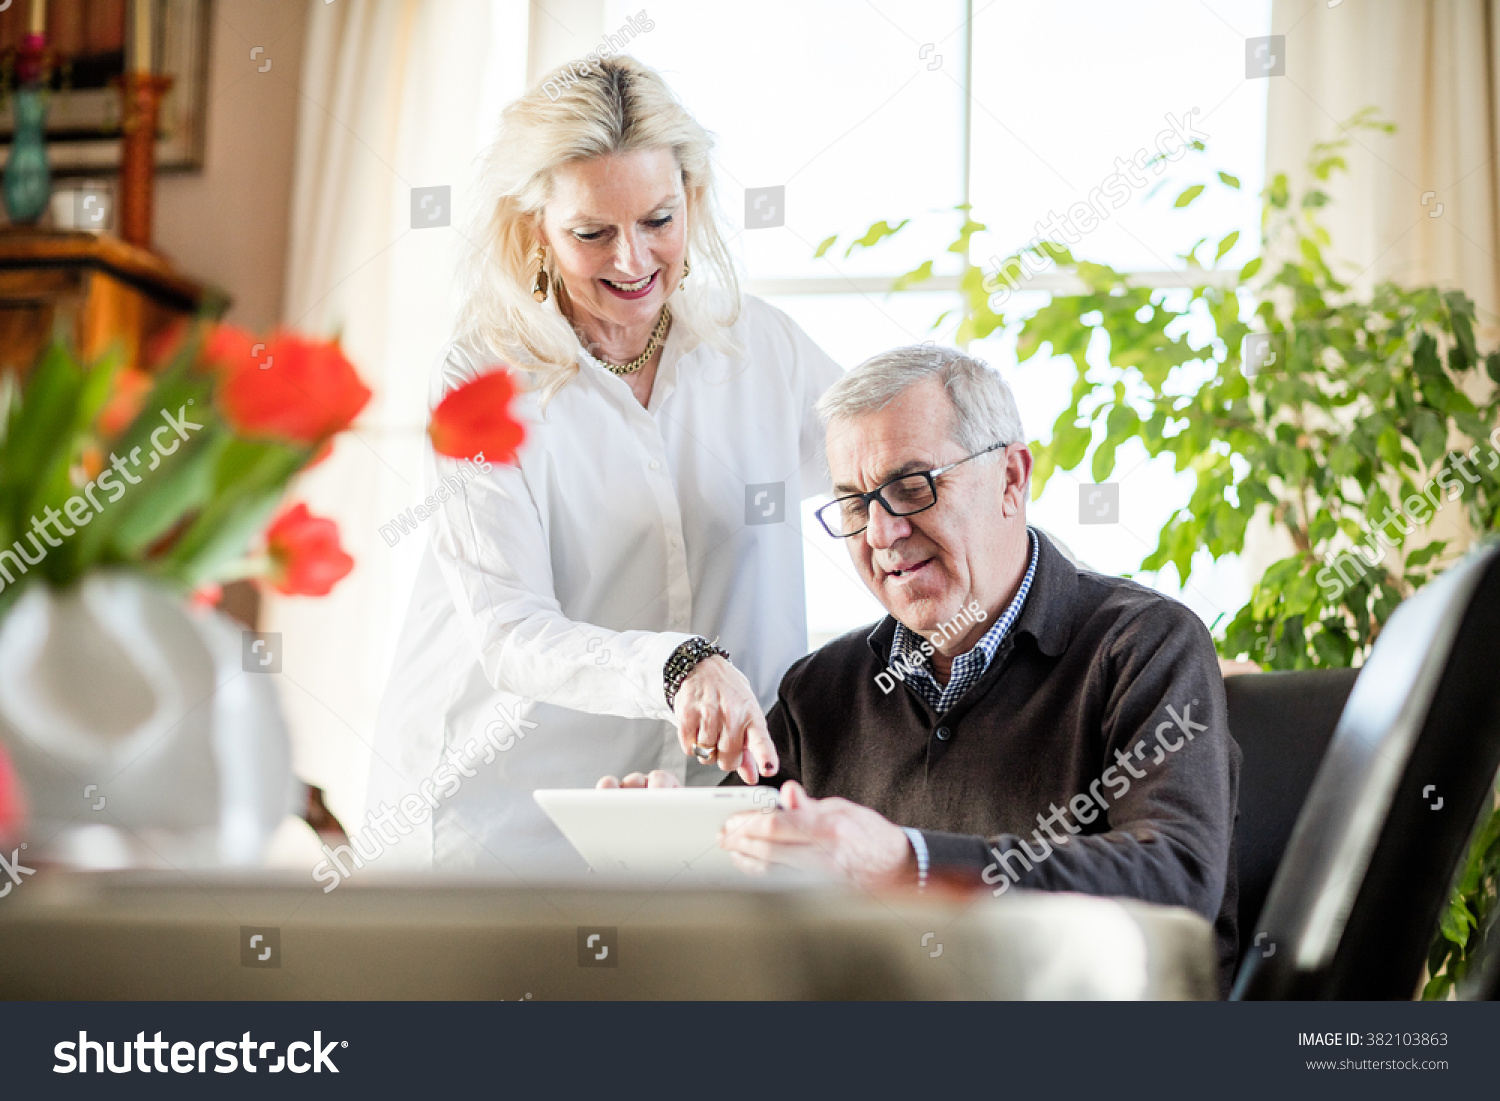 Older Couple Having Fun Smiling While Stock Photo Edit Now 382103863